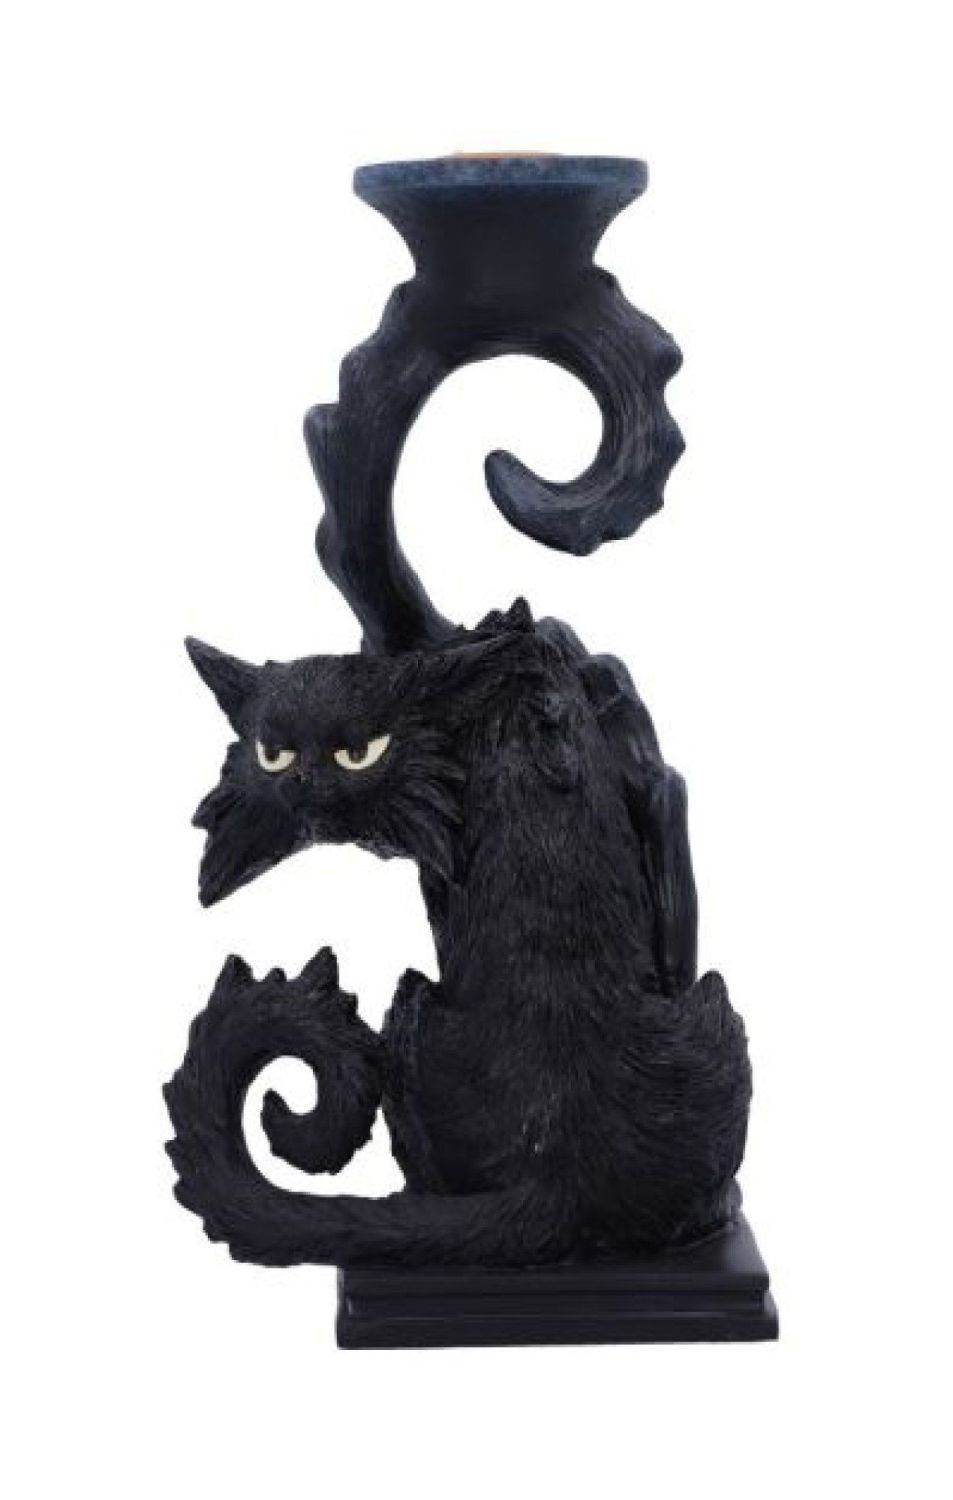 Nemesis now Spite cat candlestick RRP £19.99